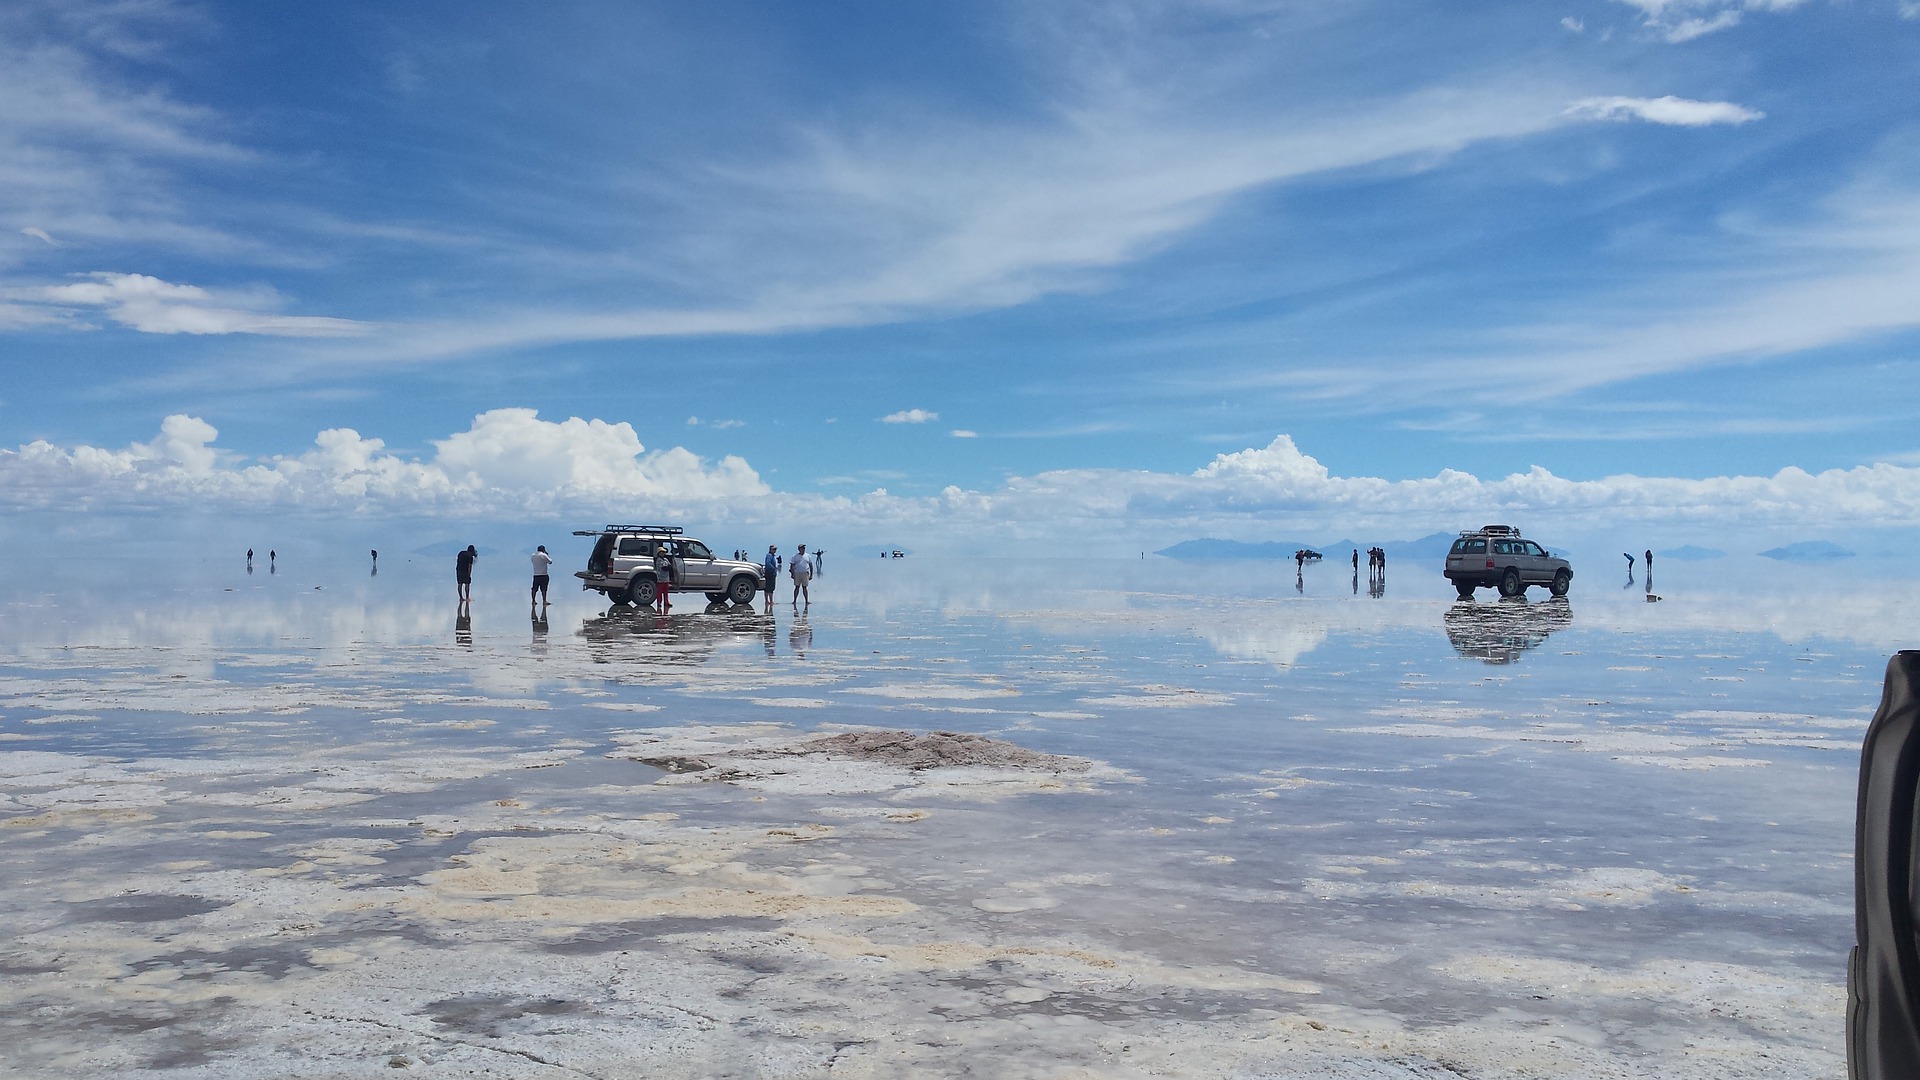 Озеро в боливии. Салар де Уюни озеро. Озеро Уюни в Боливии. Боливия озеро солончак. Солончак Уюни соленое озеро Боливии.